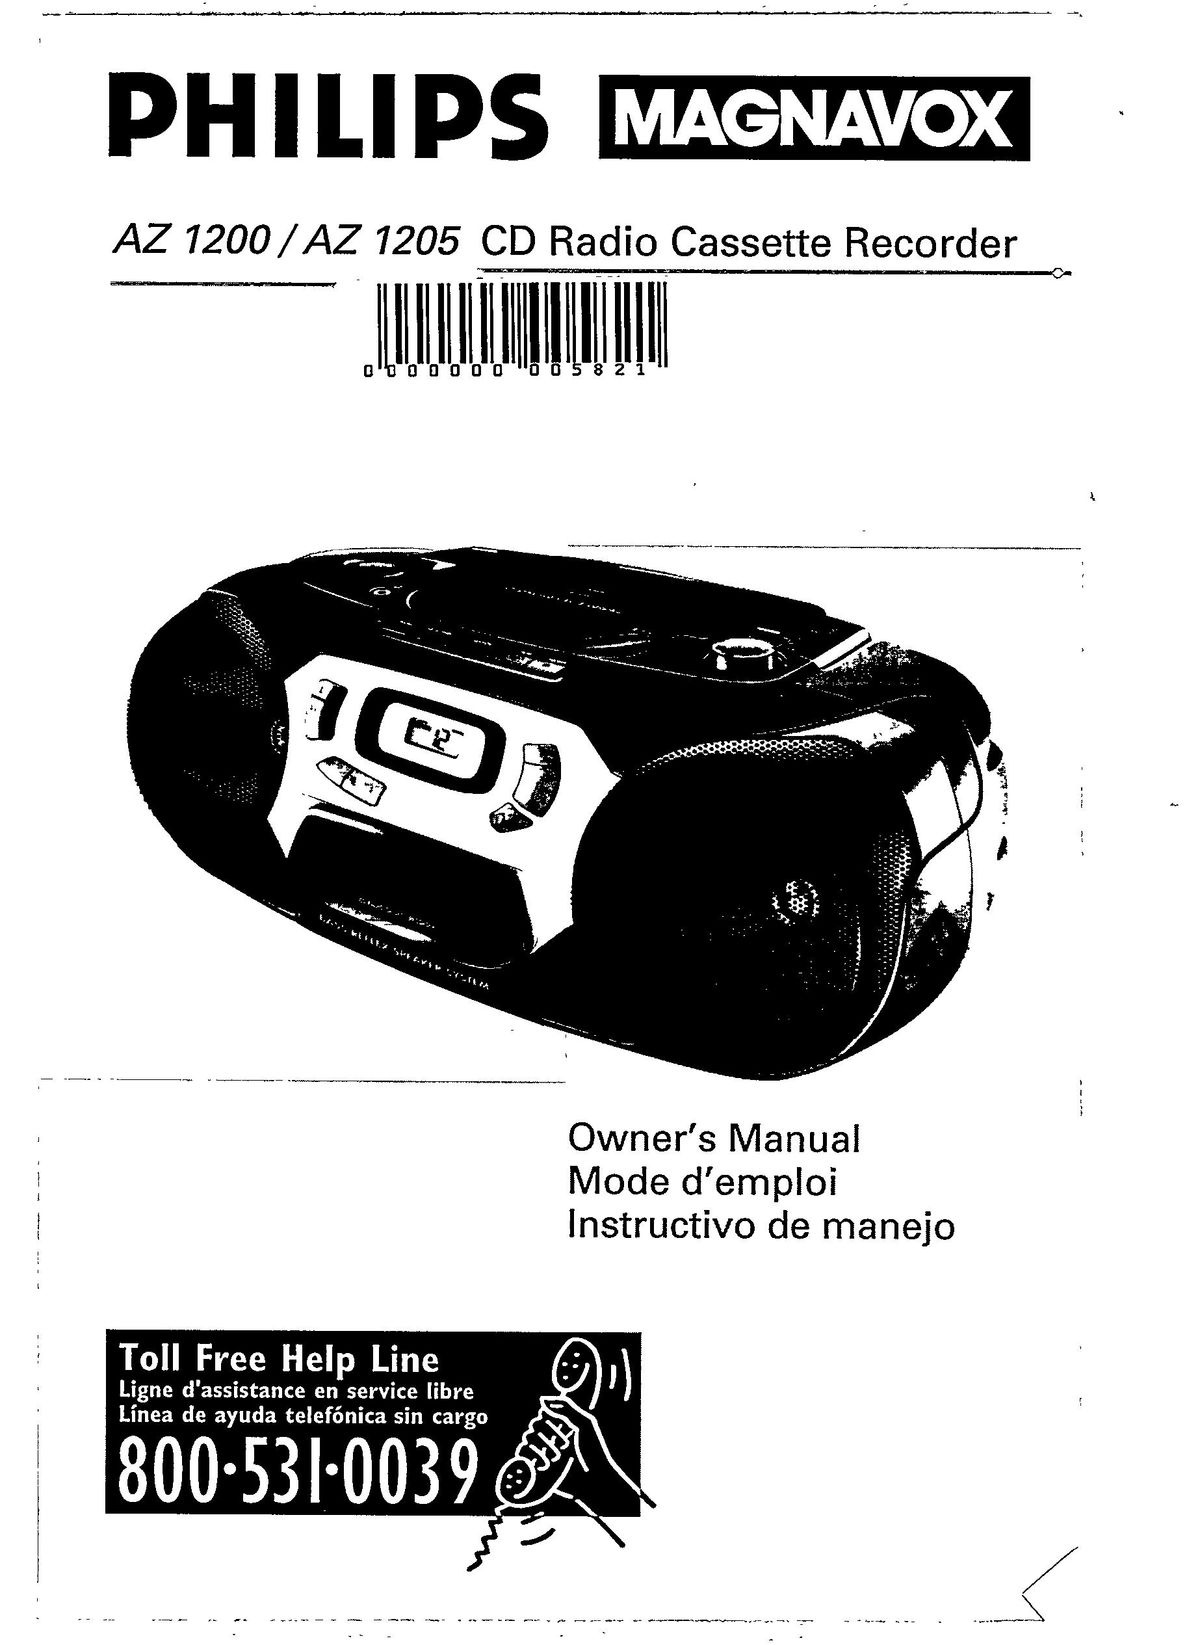 Magnavox AZ 1200 Portable CD Player User Manual